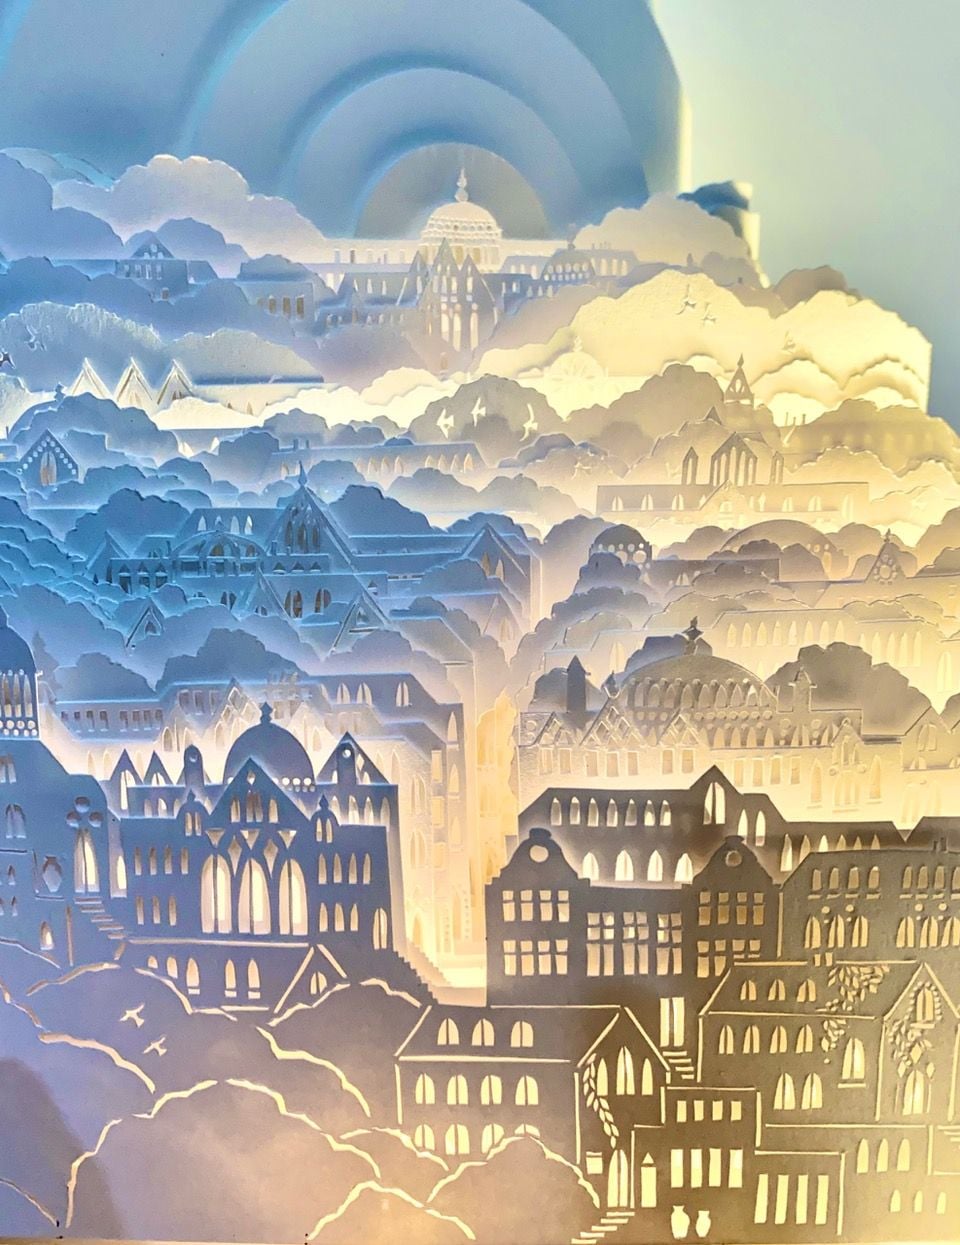 Intricate paper landscape by artist Ayumi Shibata.